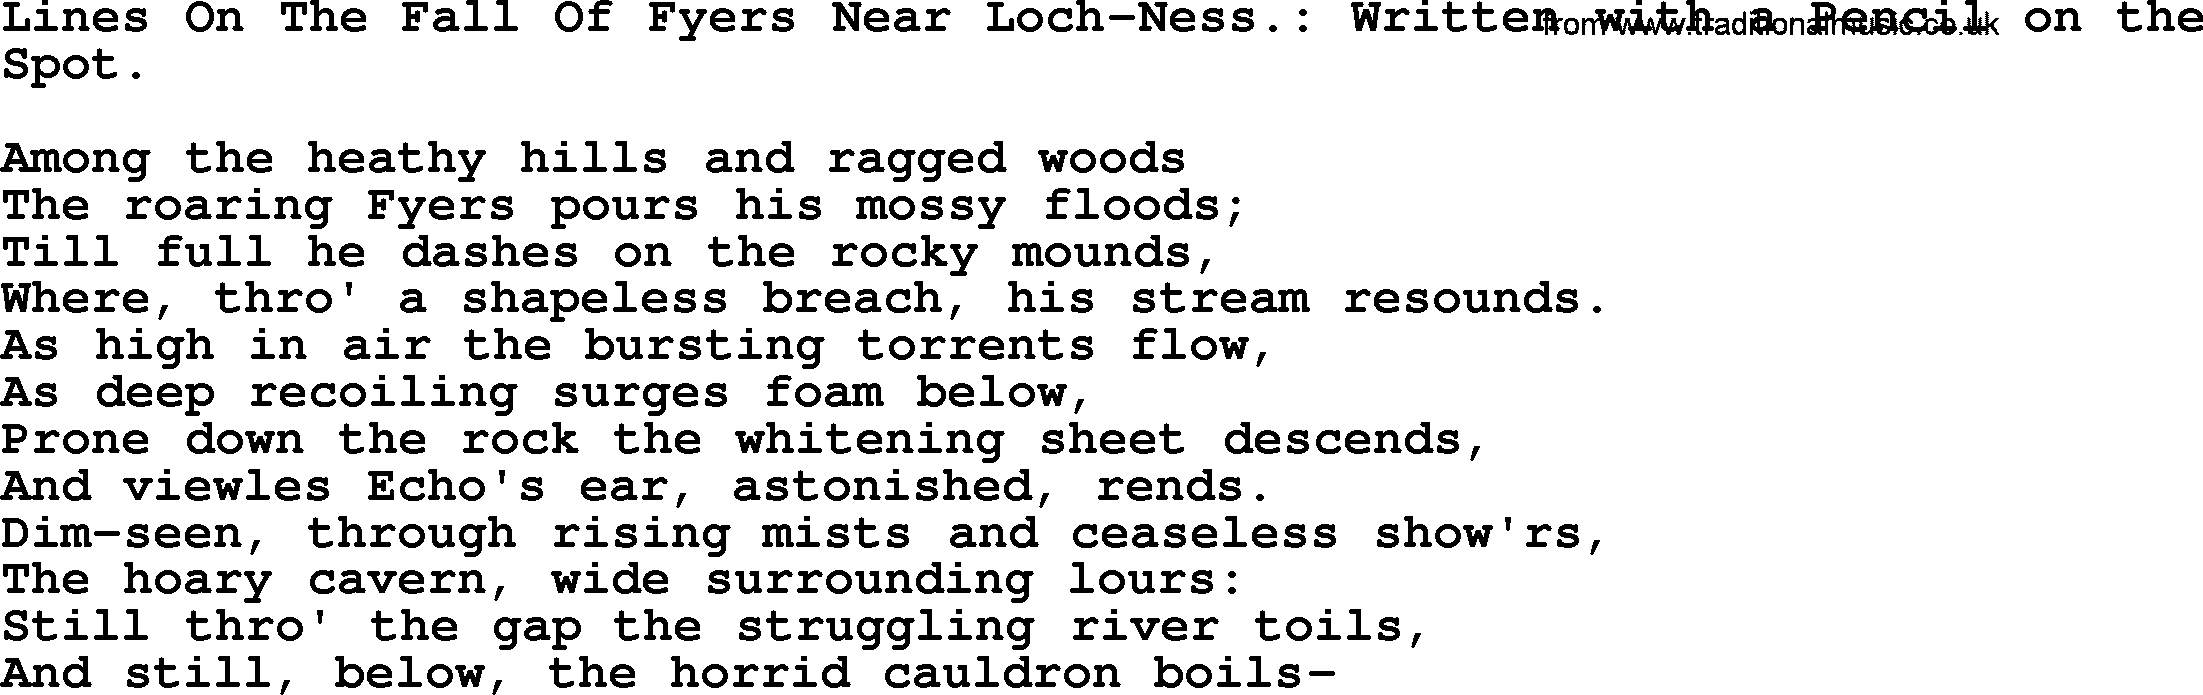 Robert Burns Songs & Lyrics: Lines On The Fall Of Fyers Near Loch-ness